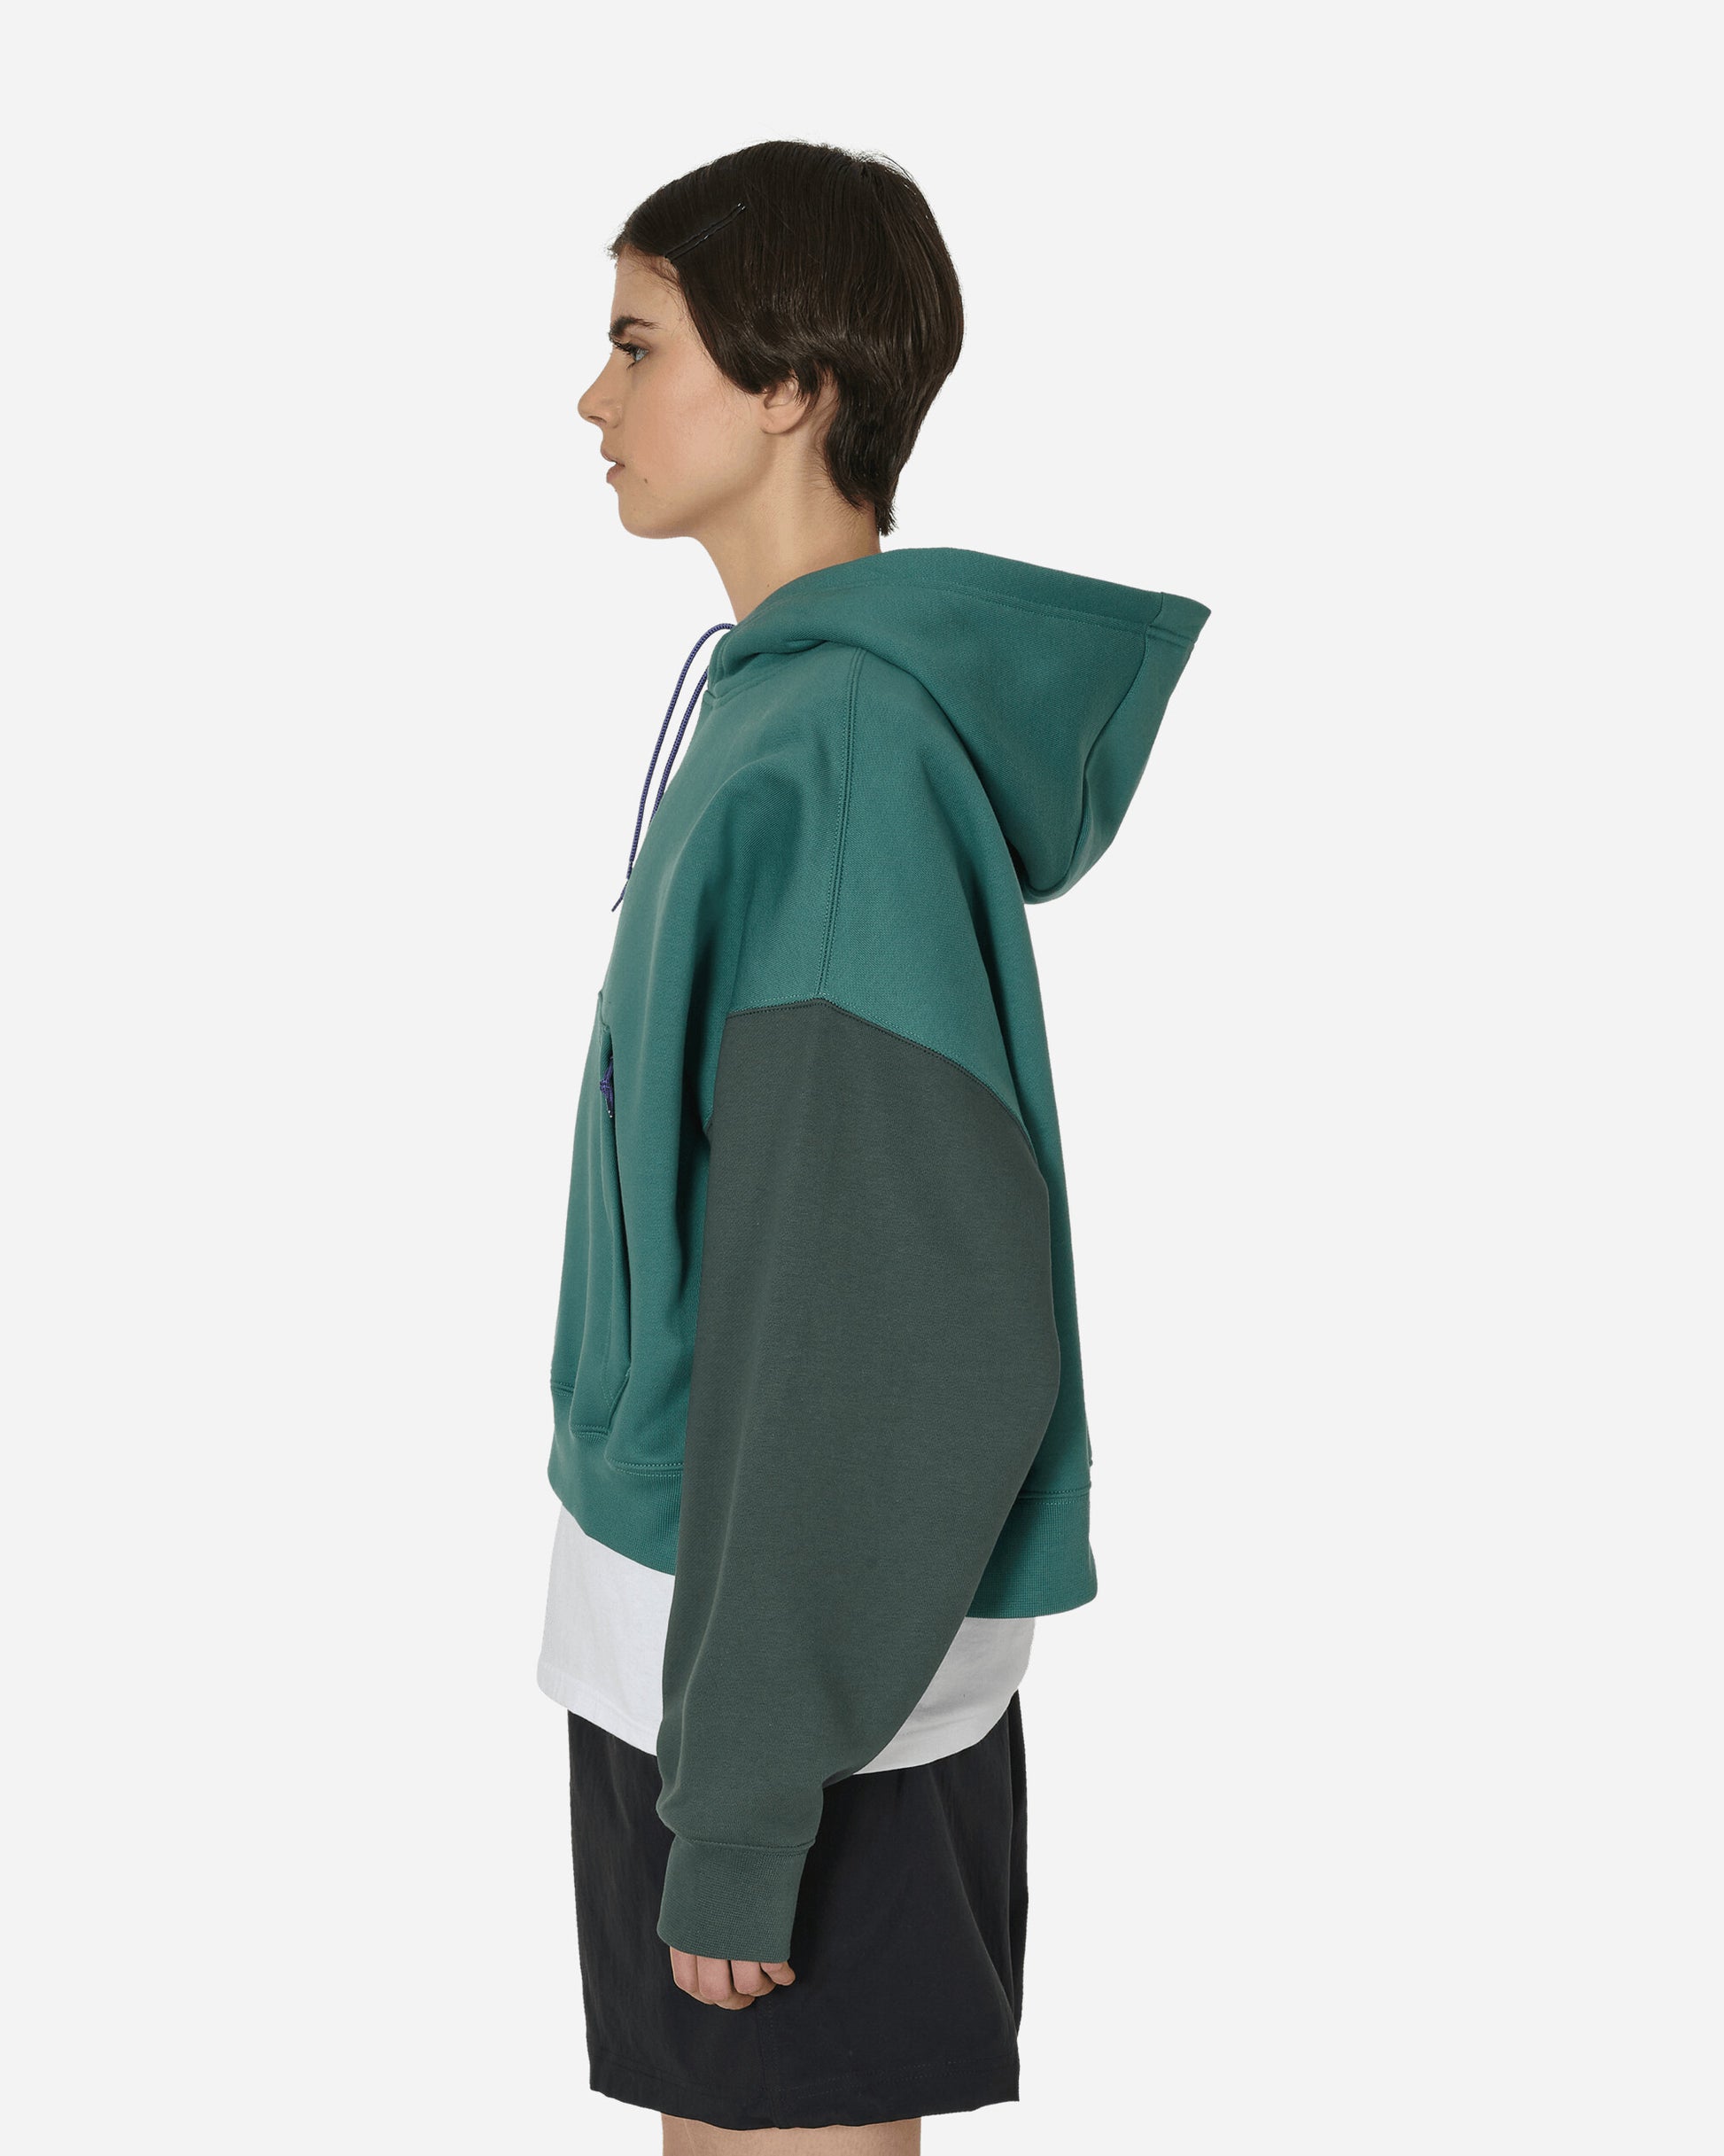 Nike Wmns W Acg Tf Tuff Flc Hoodie Bicoastal/Vintage Green Sweatshirts Hoodies DQ5807-362